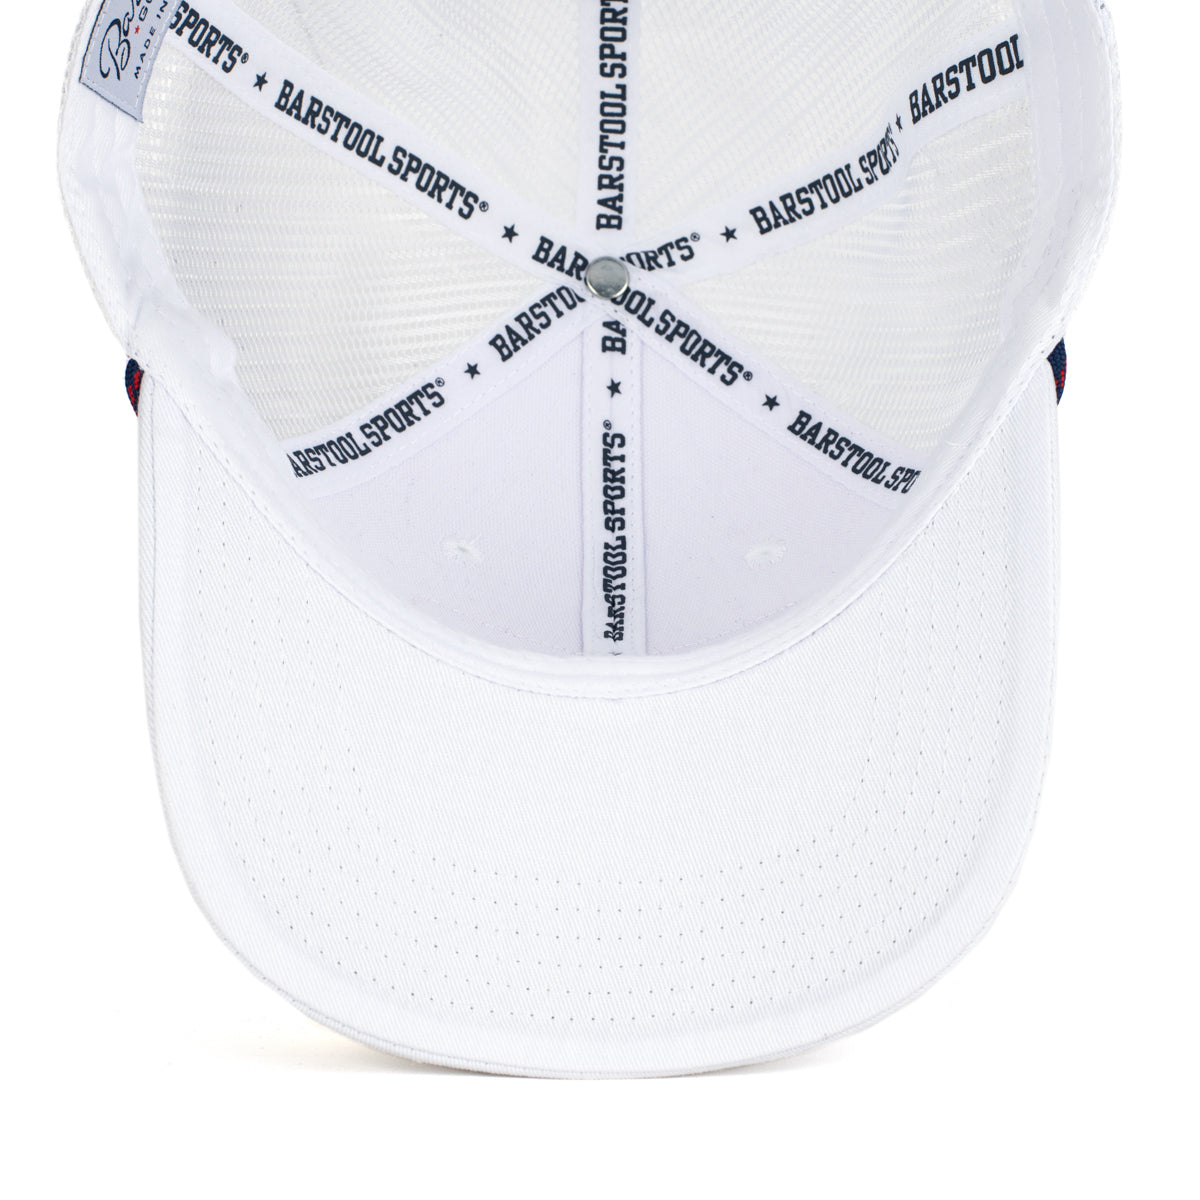 Barstool Sports Patch Trucker Hat-Hats-Barstool Sports-White-One Size-Barstool Sports